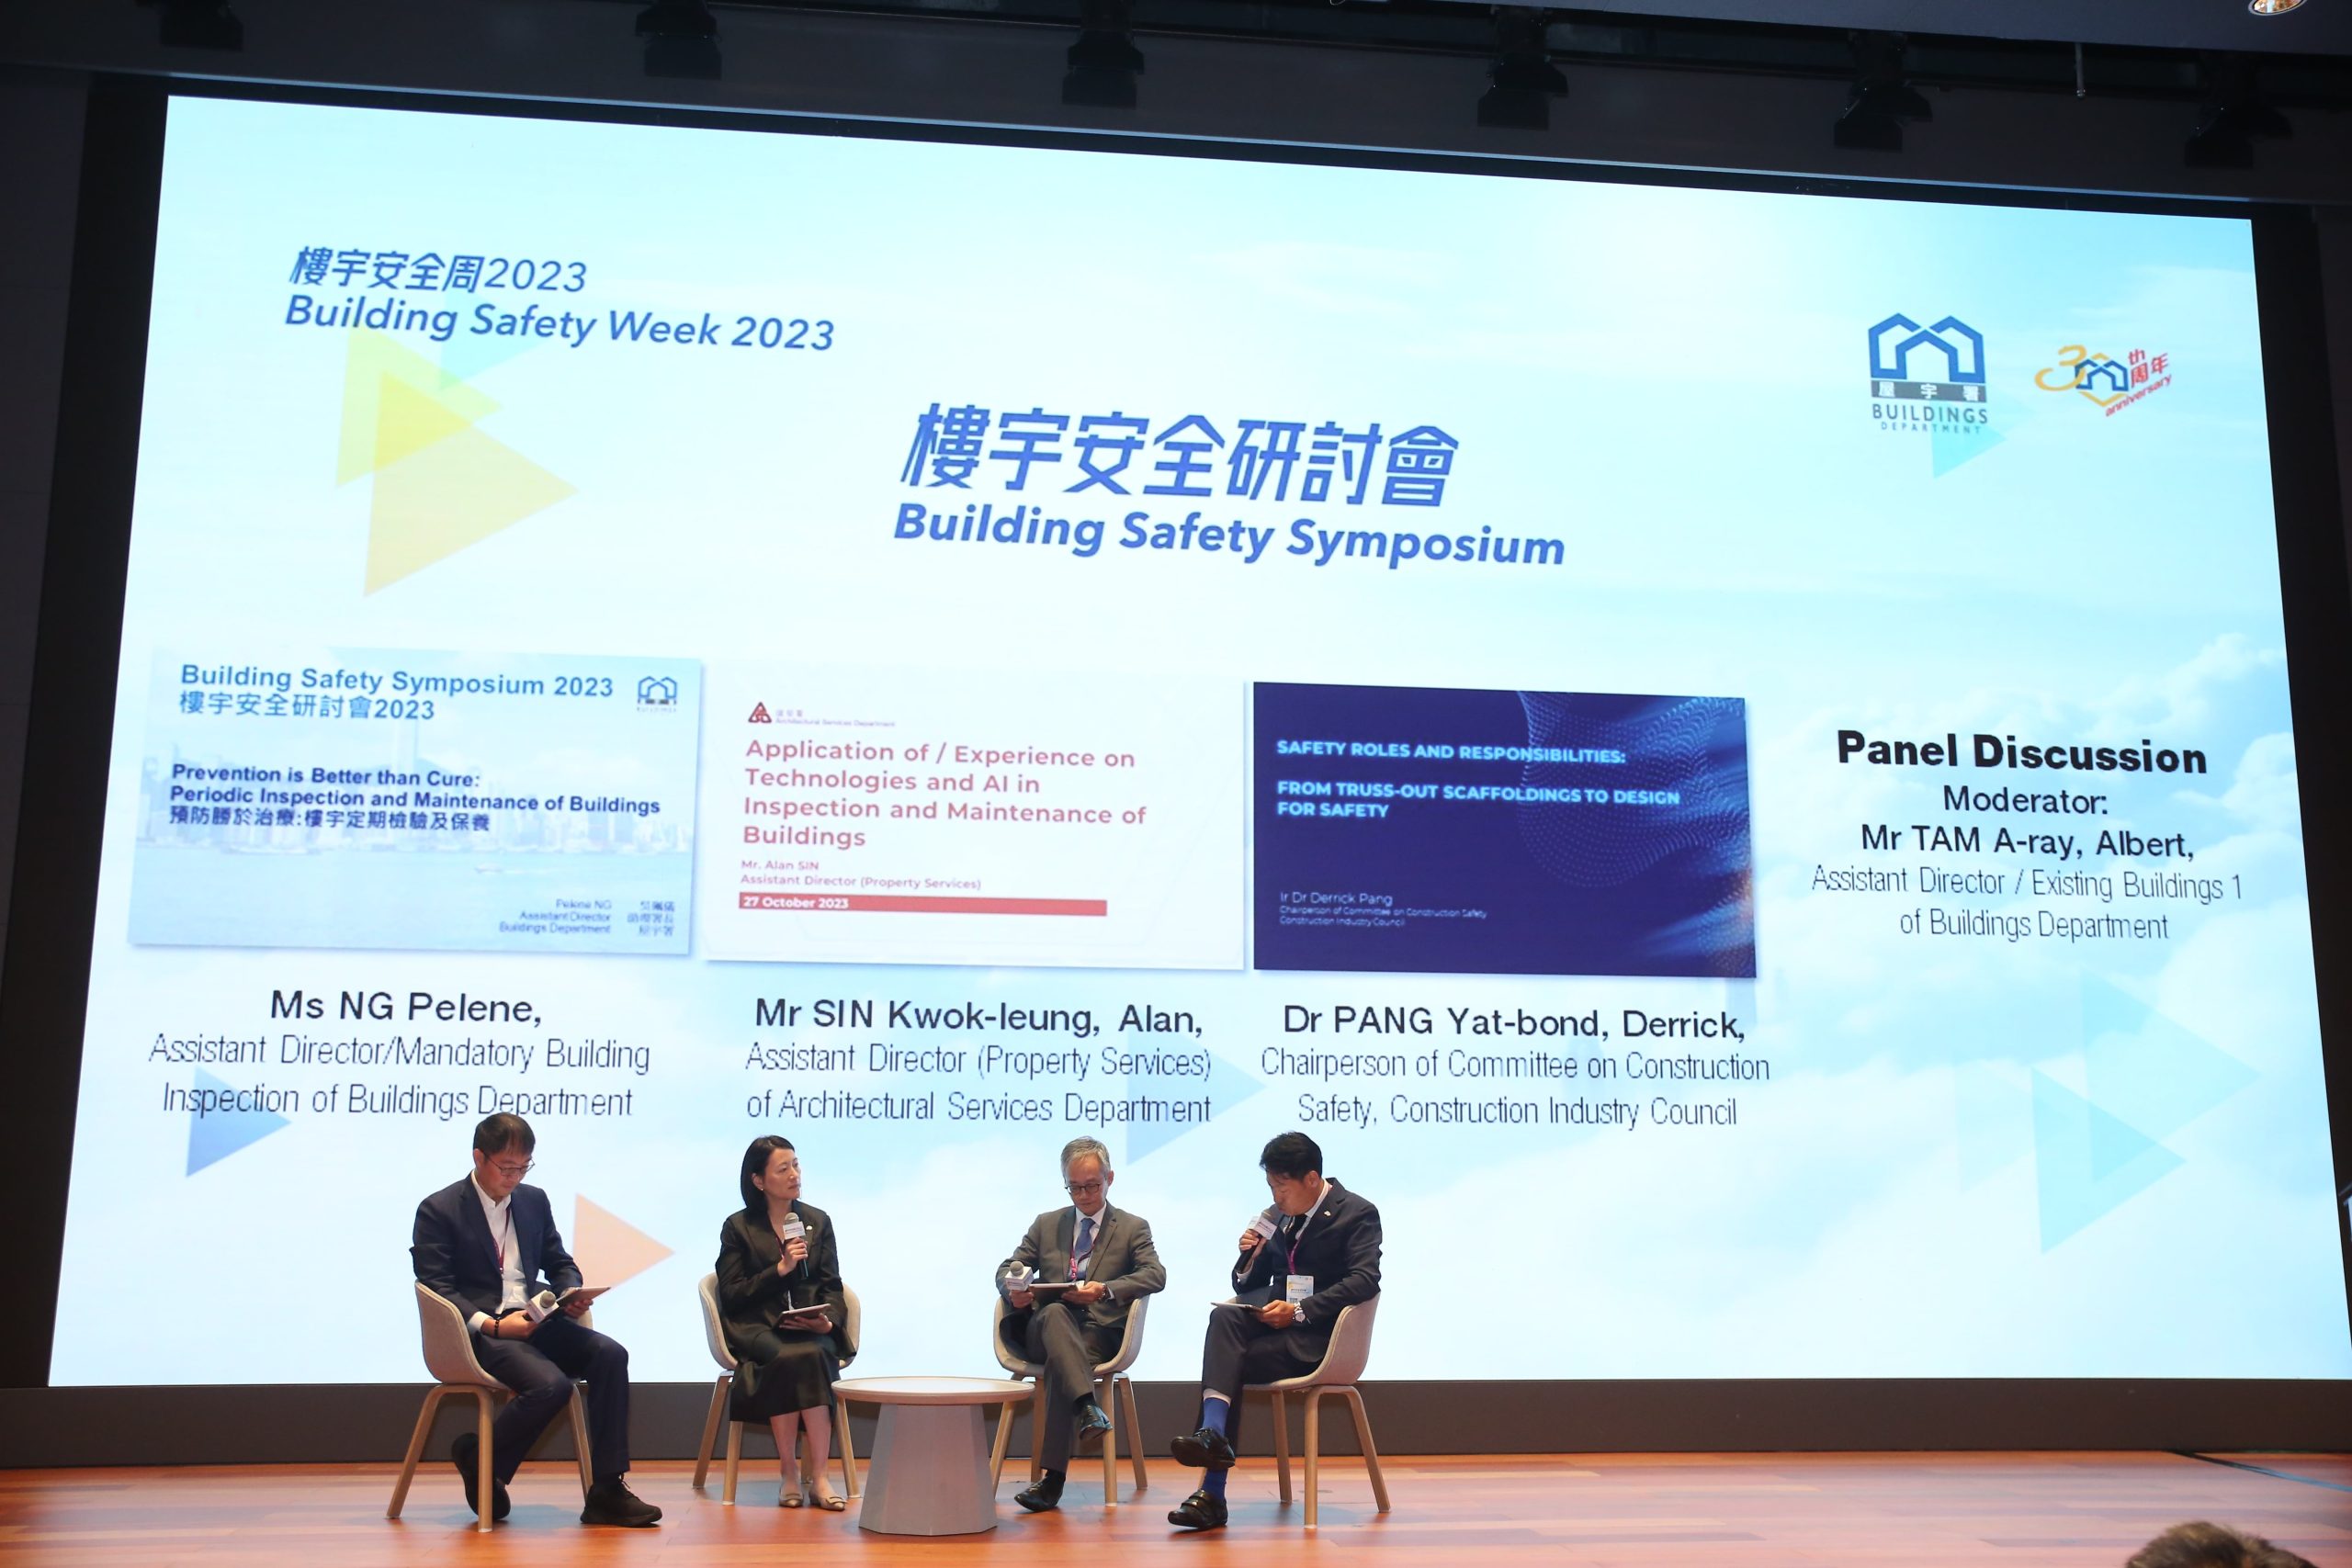 Building Safety Department Symposium 2023